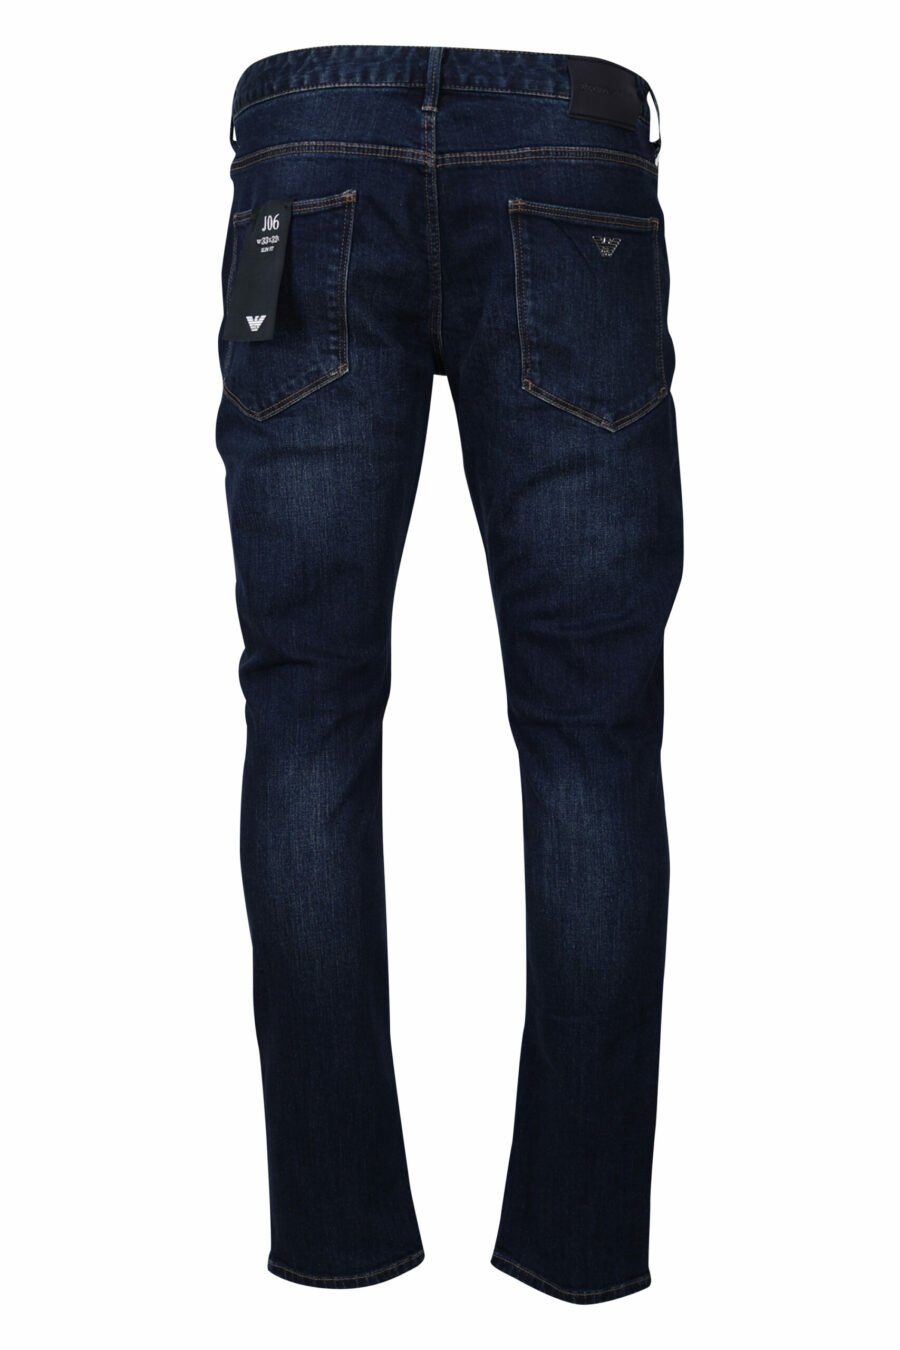 Dunkelblaue Jeans mit Metalladler-Logo - 8057767476106 2 1 skaliert